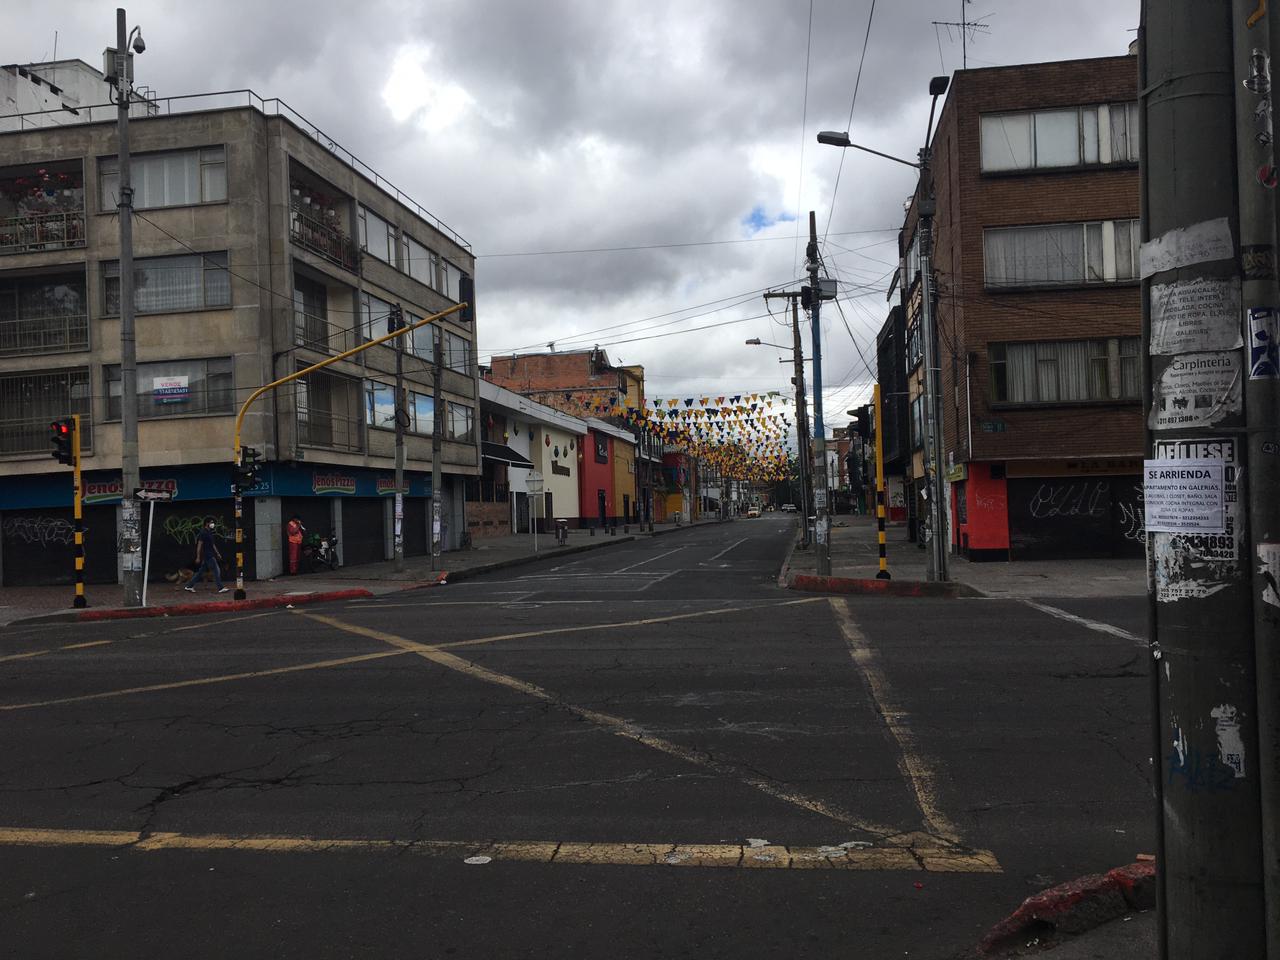 Surprising new lockdown rules in Bogotá